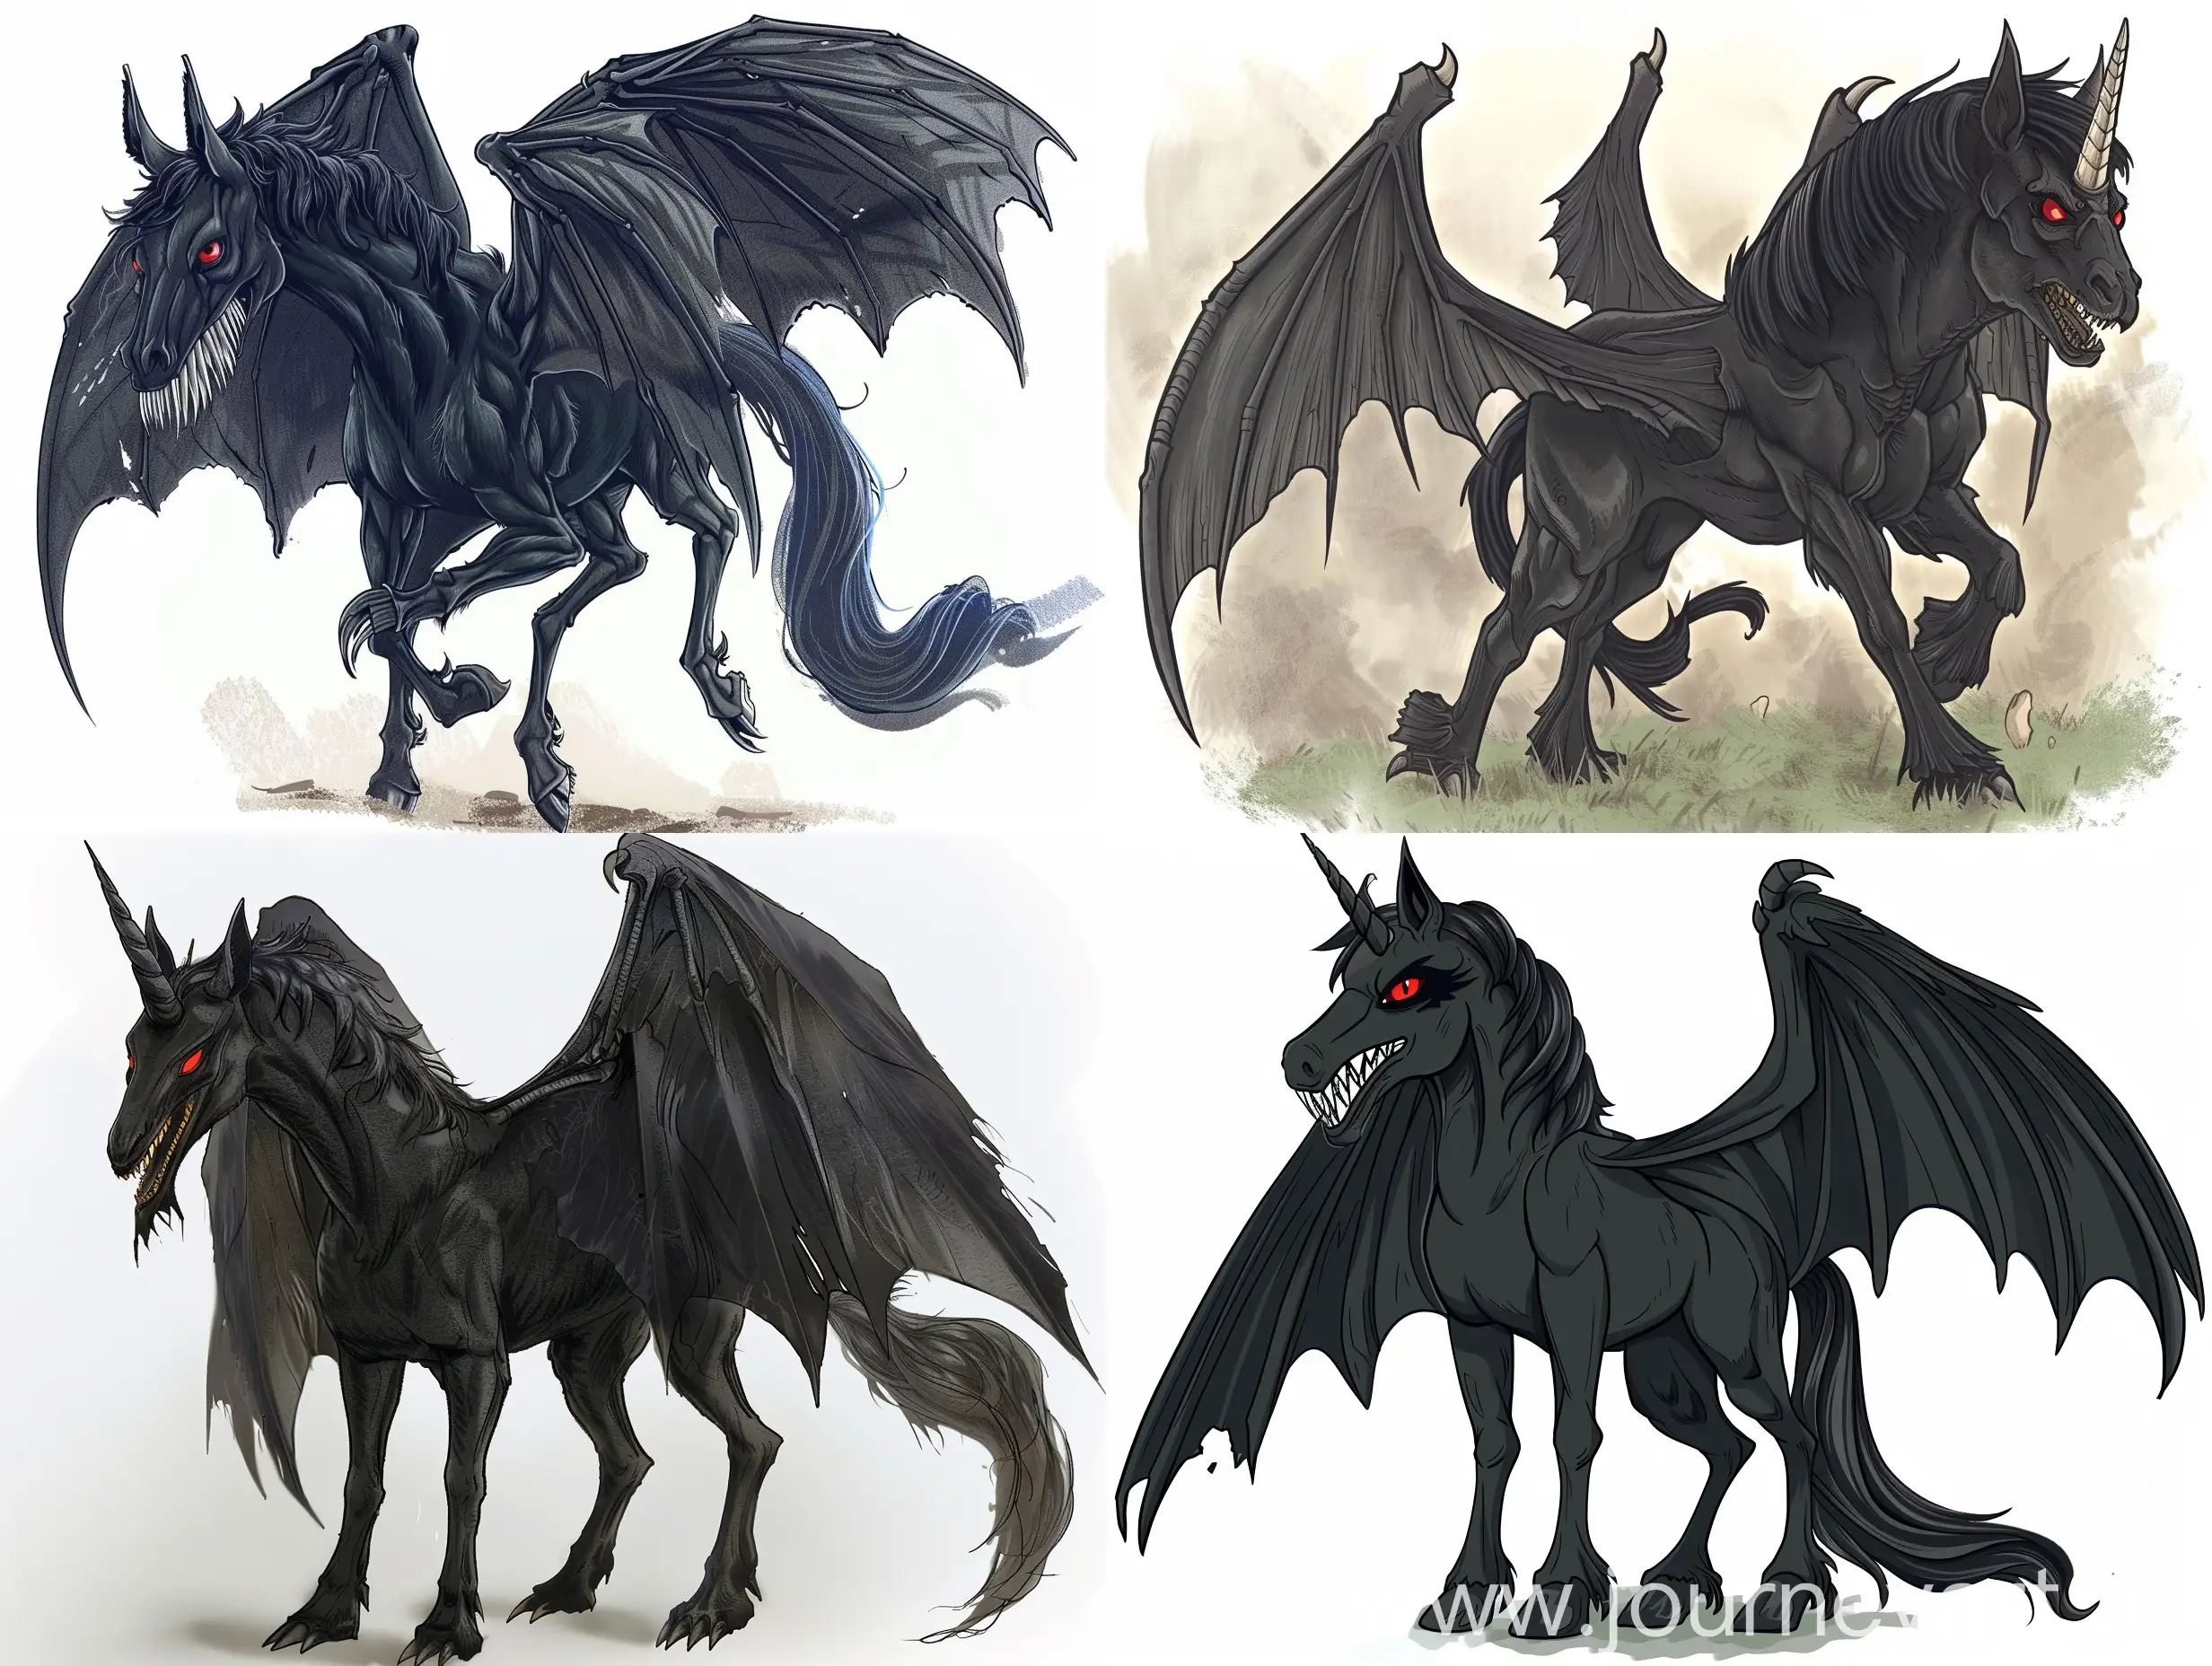 Dark-Pegasus-with-Batlike-Wings-and-Fiery-Gaze